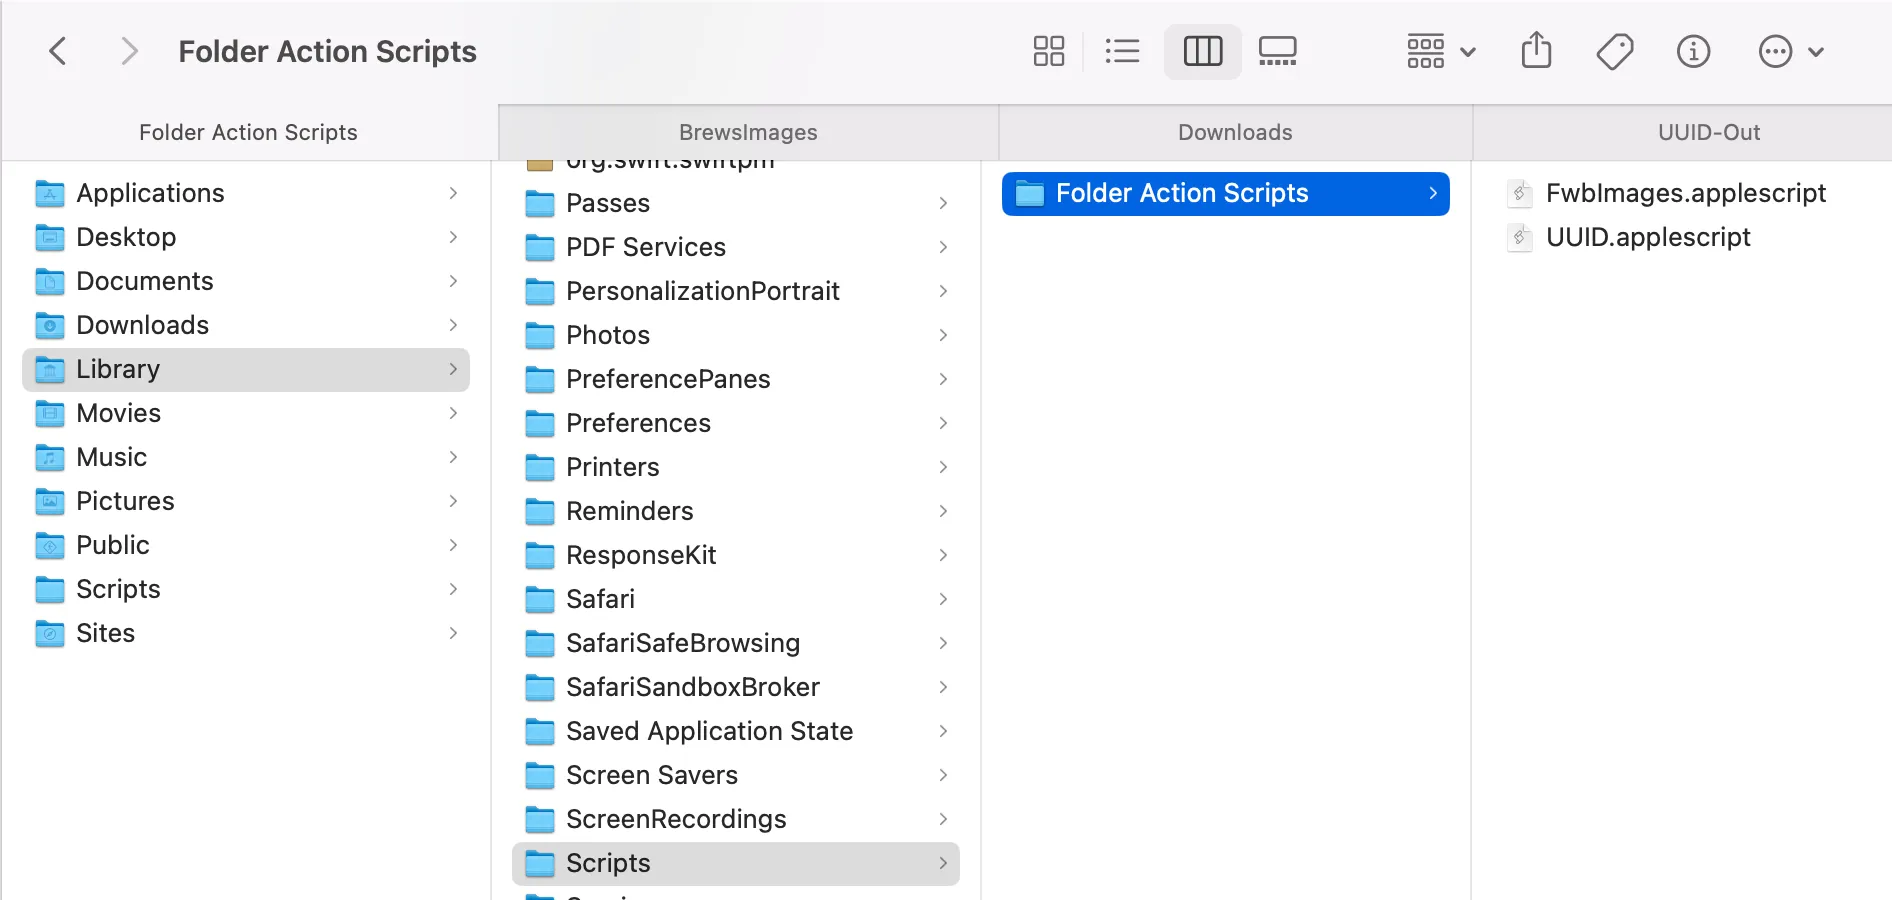 Folder Action Scripts folder